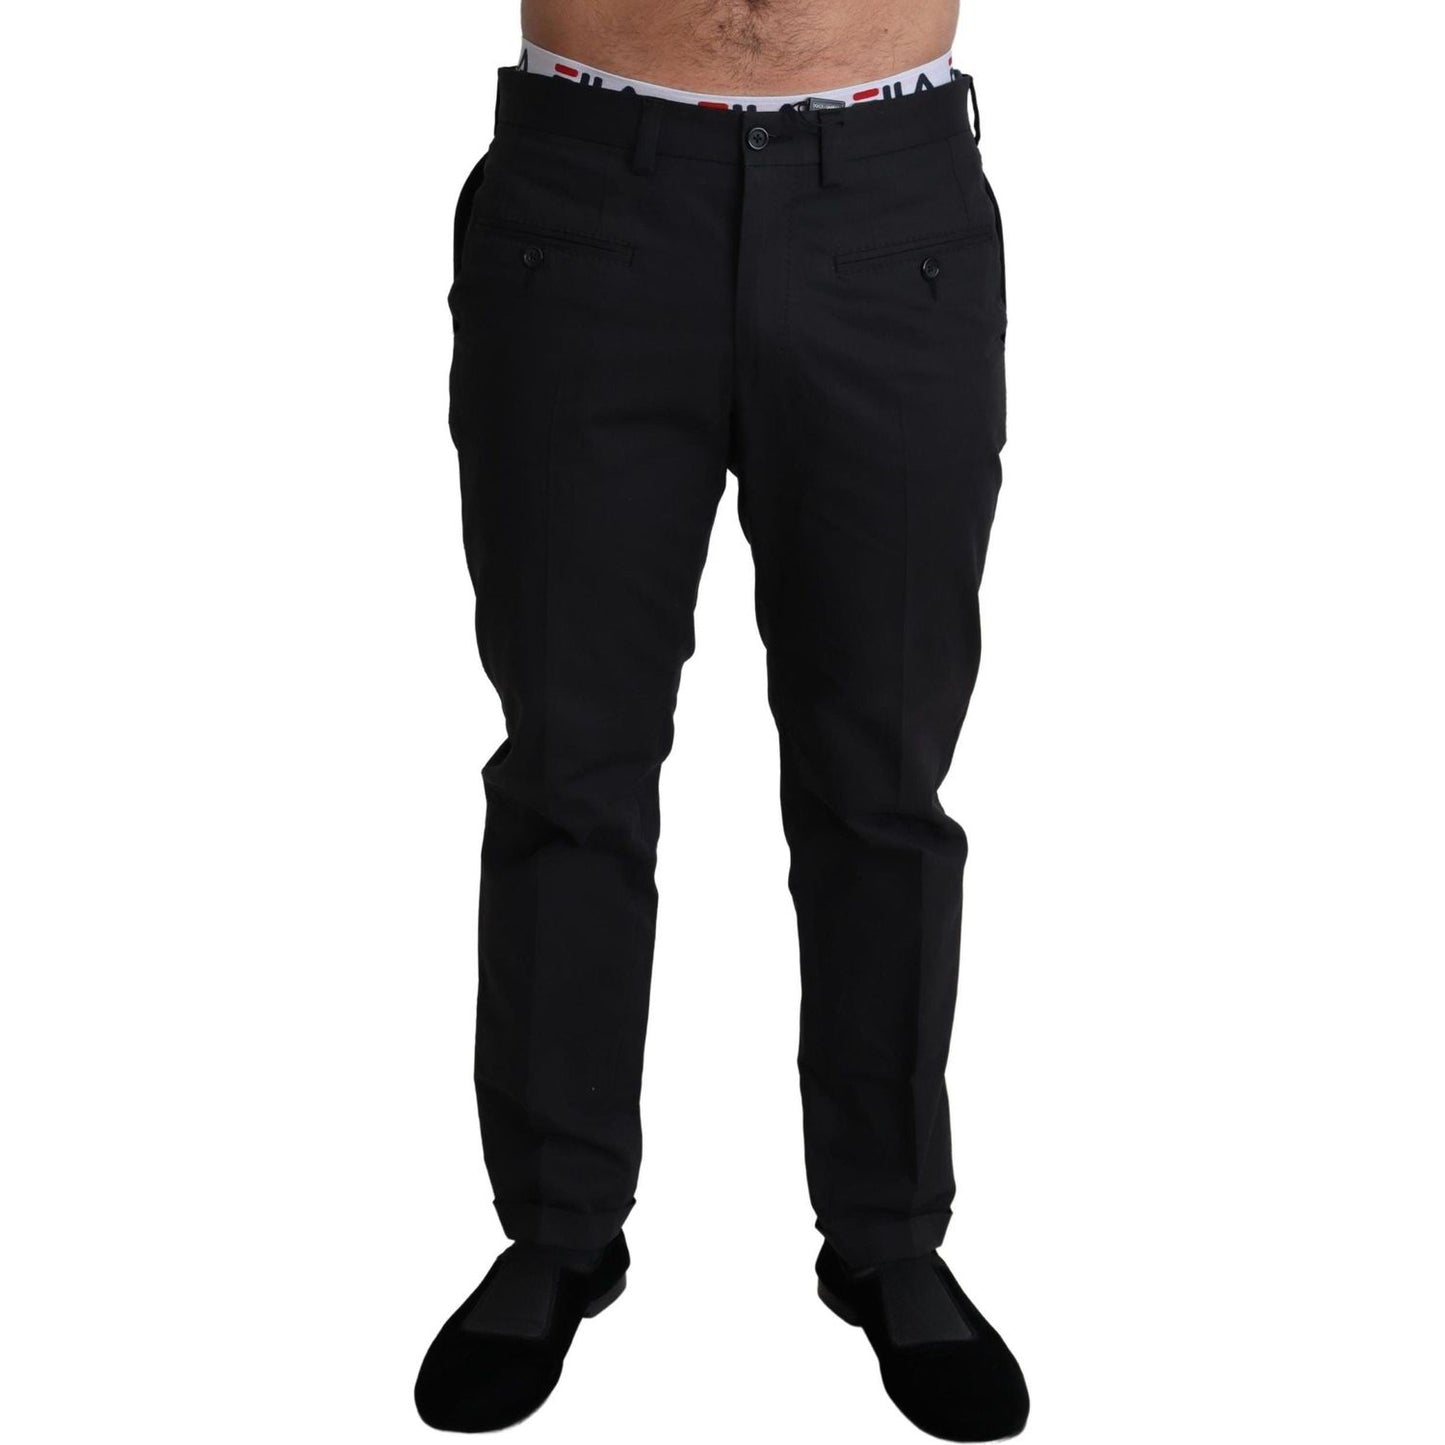 Dolce & Gabbana Elegant Black Stretch Cotton Trousers black-cotton-stretch-dress-formal-trouser-pants IMG_2280-scaled-9c821894-4f7.jpg